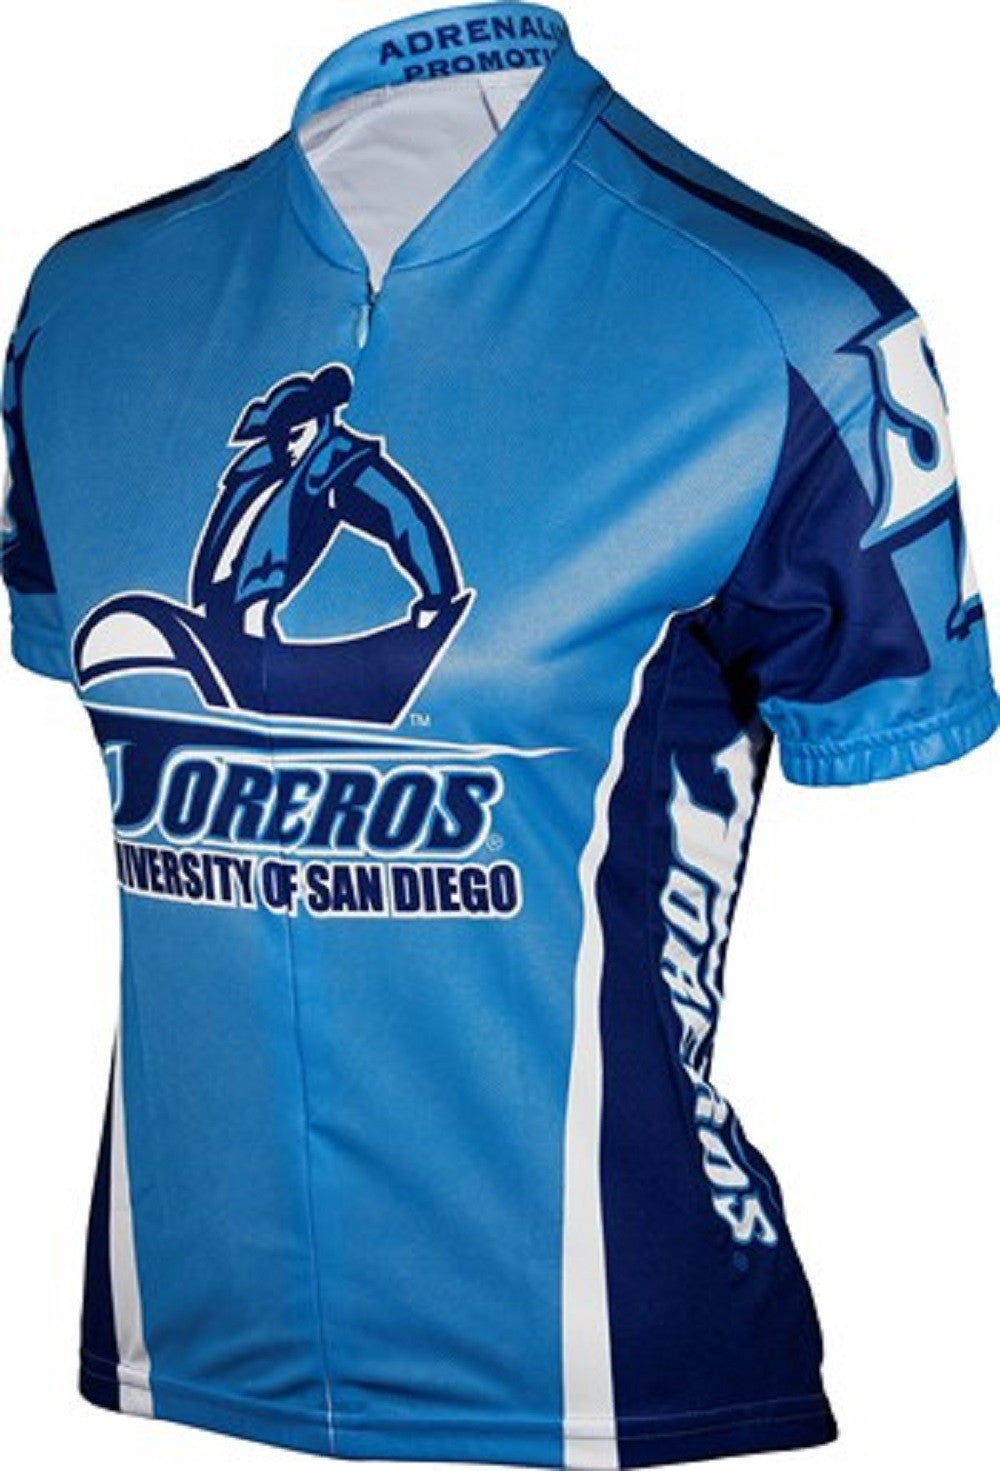 USD Toreros Women's Cycling Jersey (XS, S, M, L, XL, 2XL)